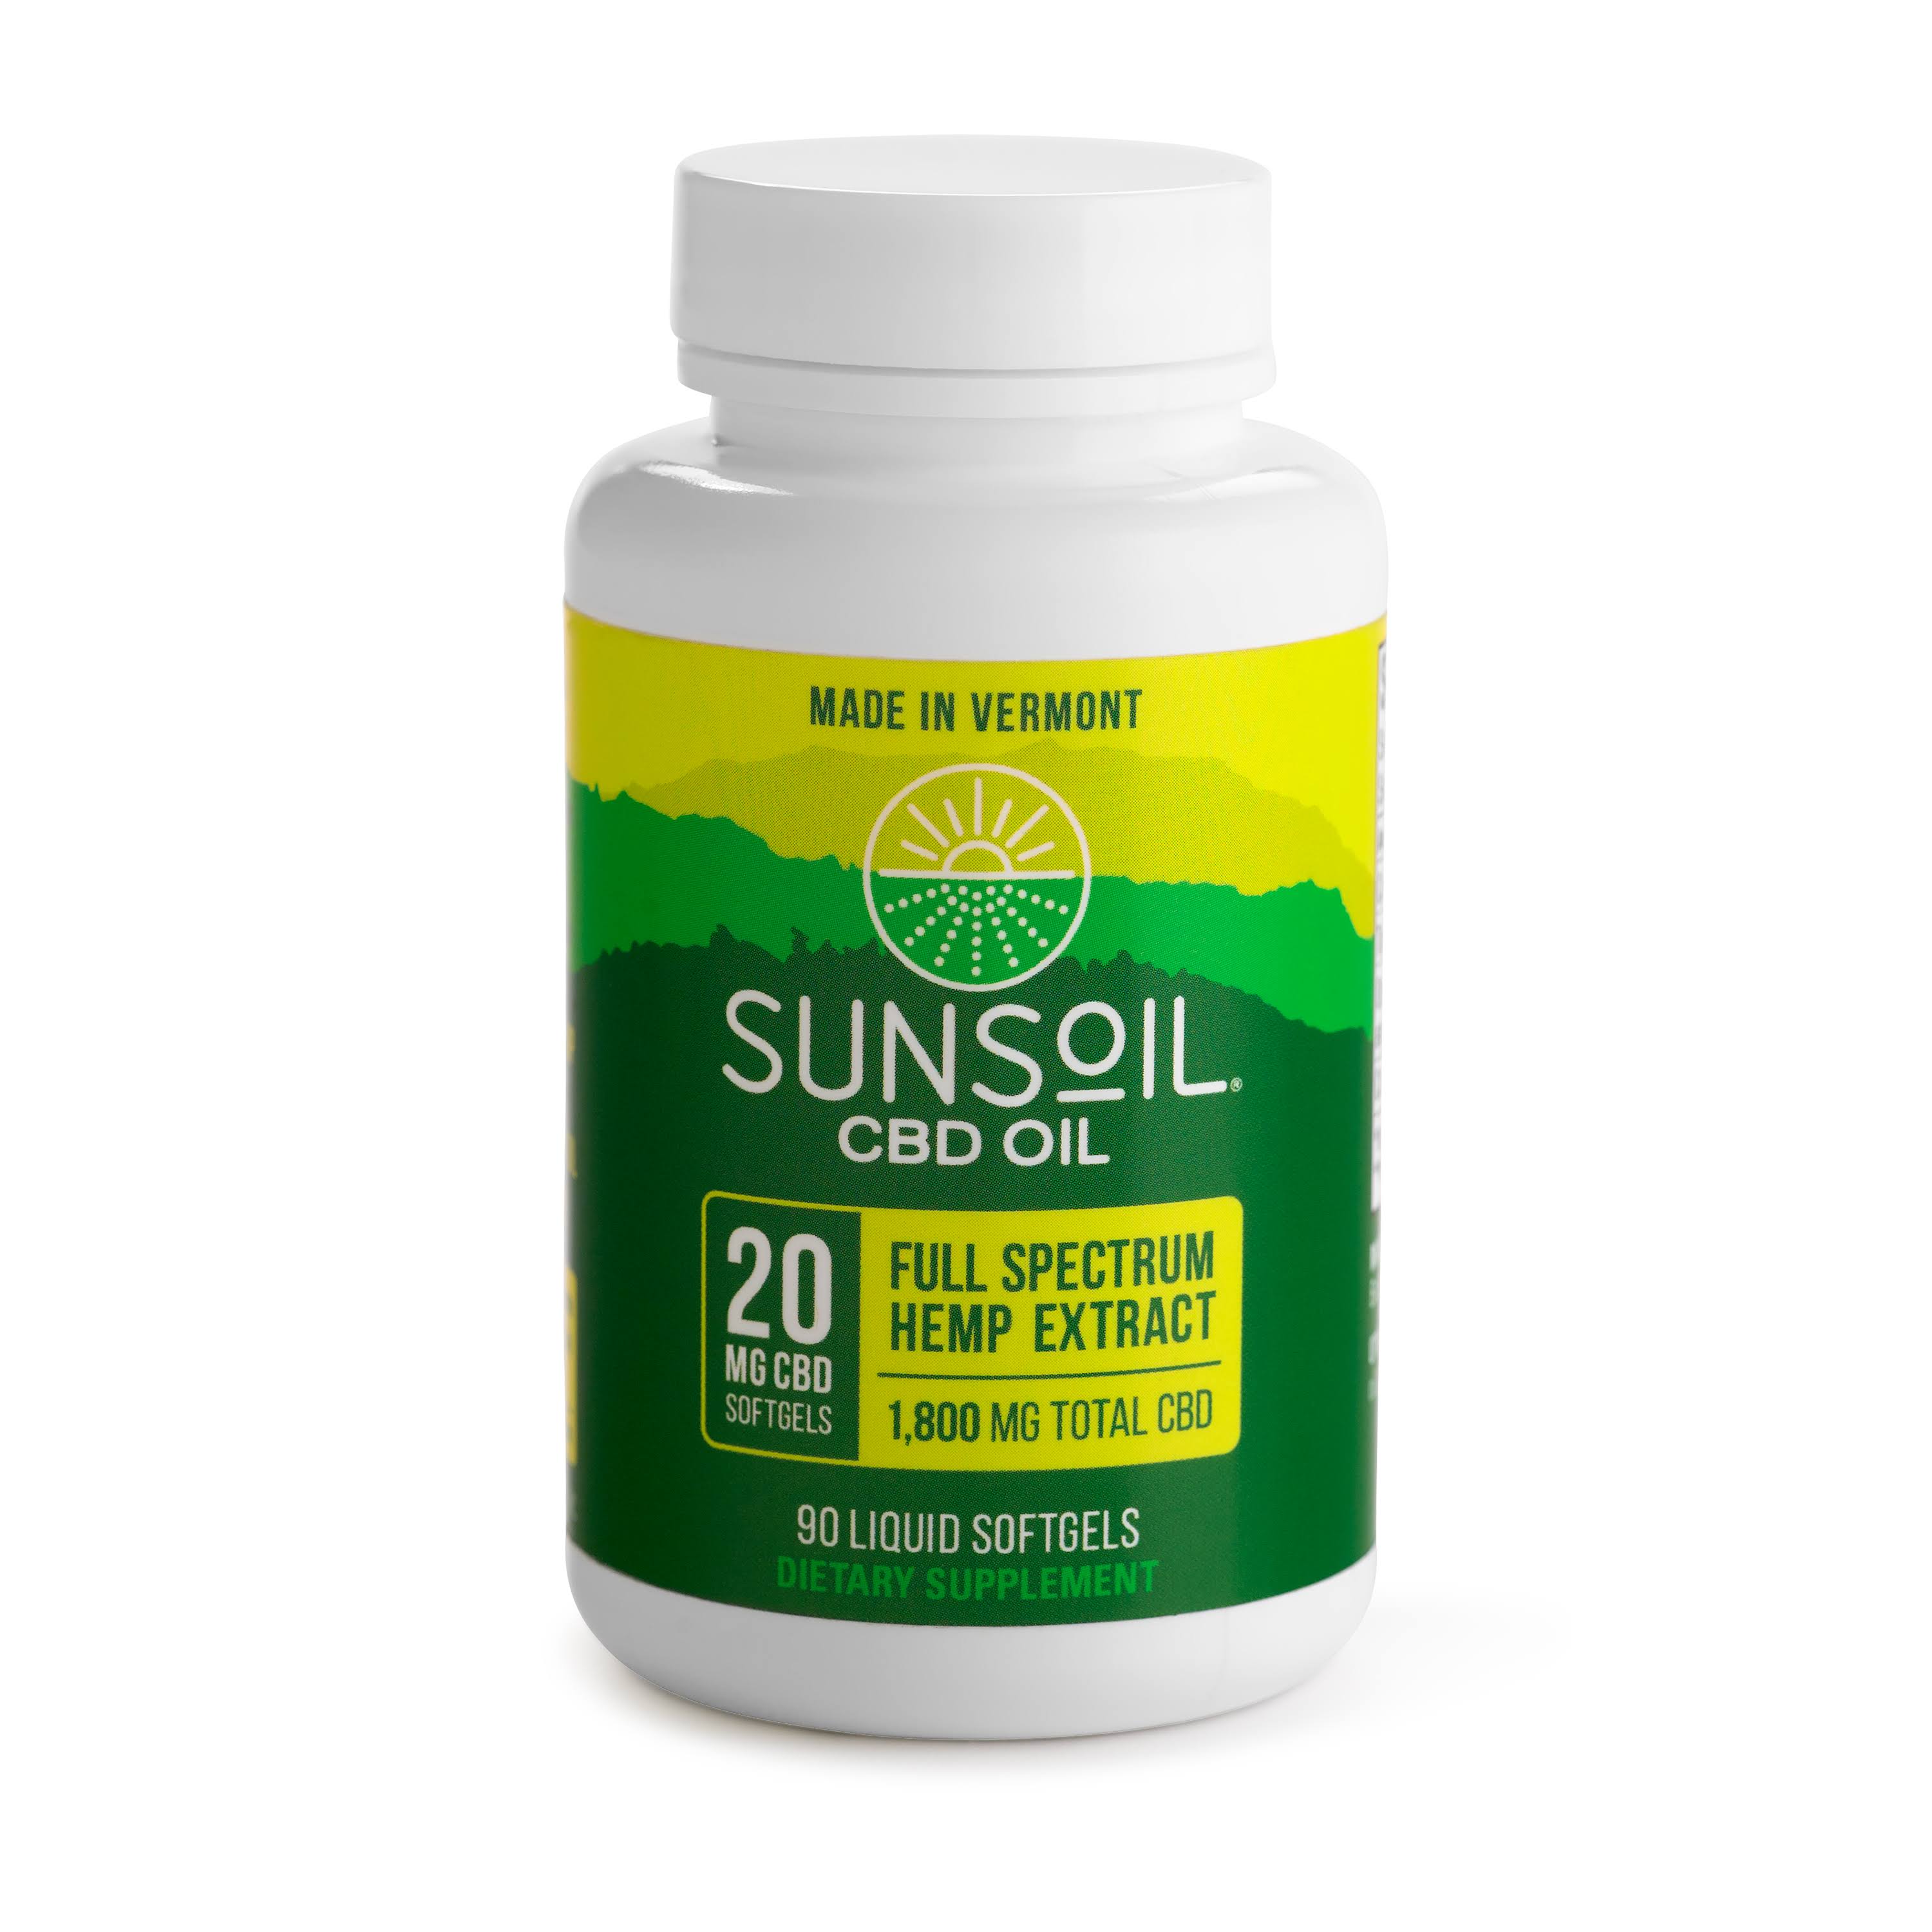 Sunsoil Cbd Oil Supplement - 90 Softgels, 20mg